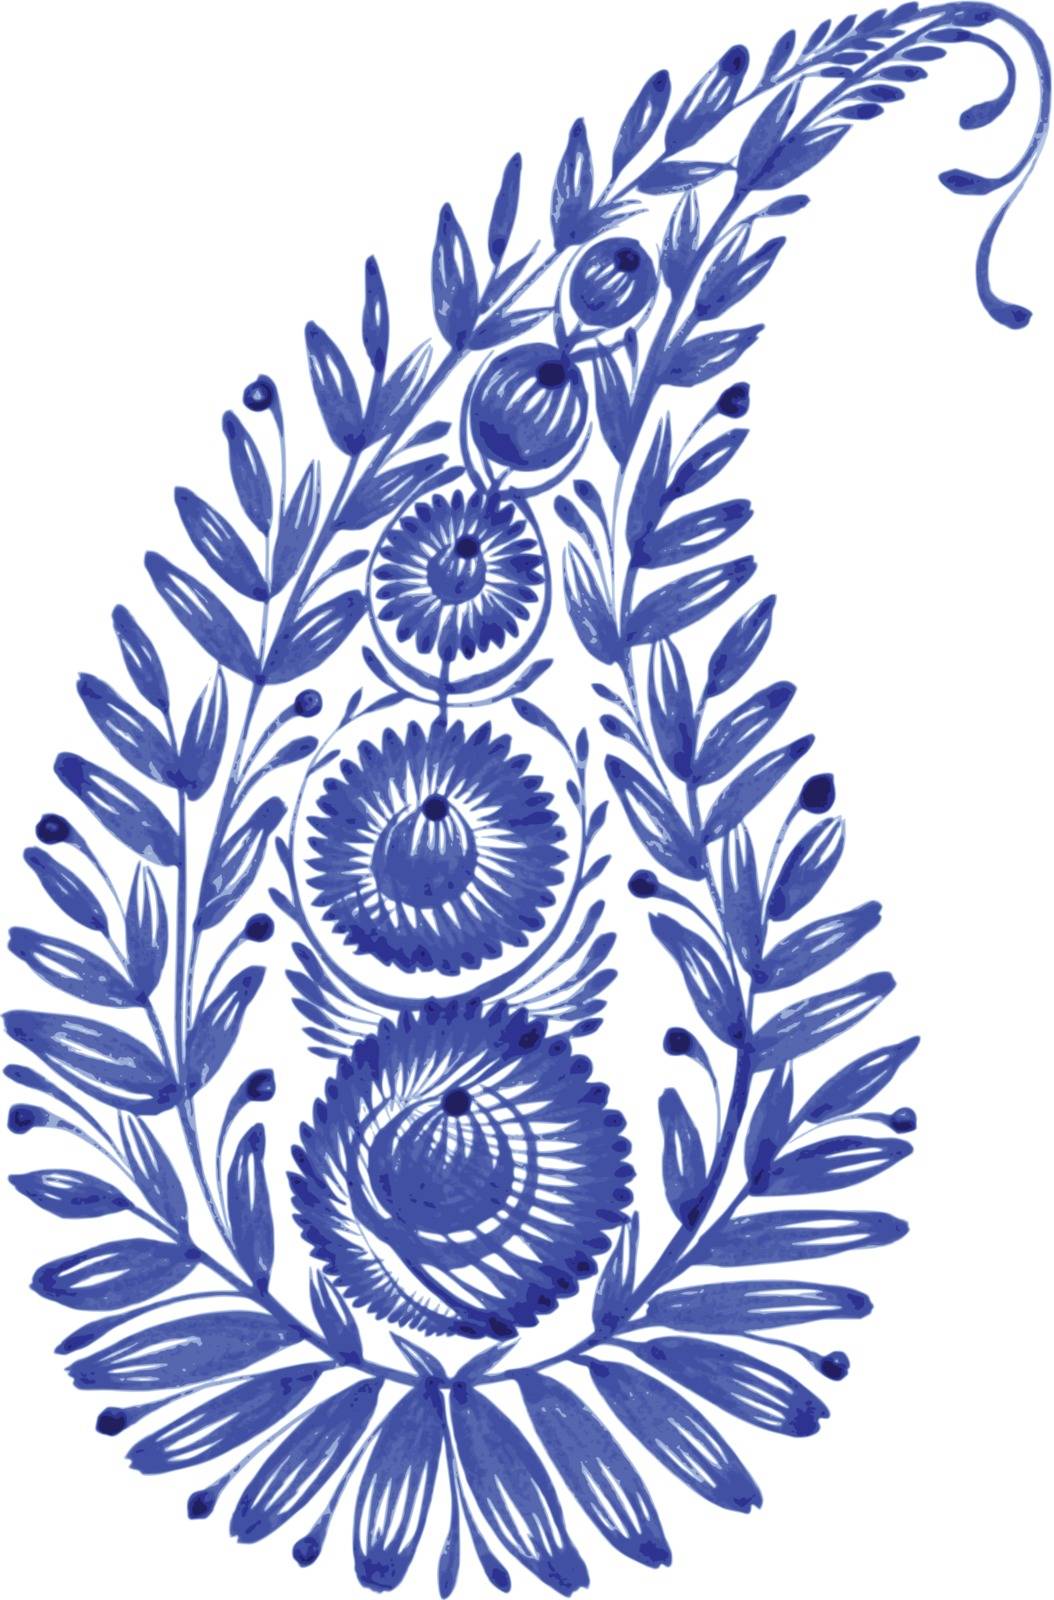 blue, flower composition, hand drawn, illustration in Ukrainian folk style